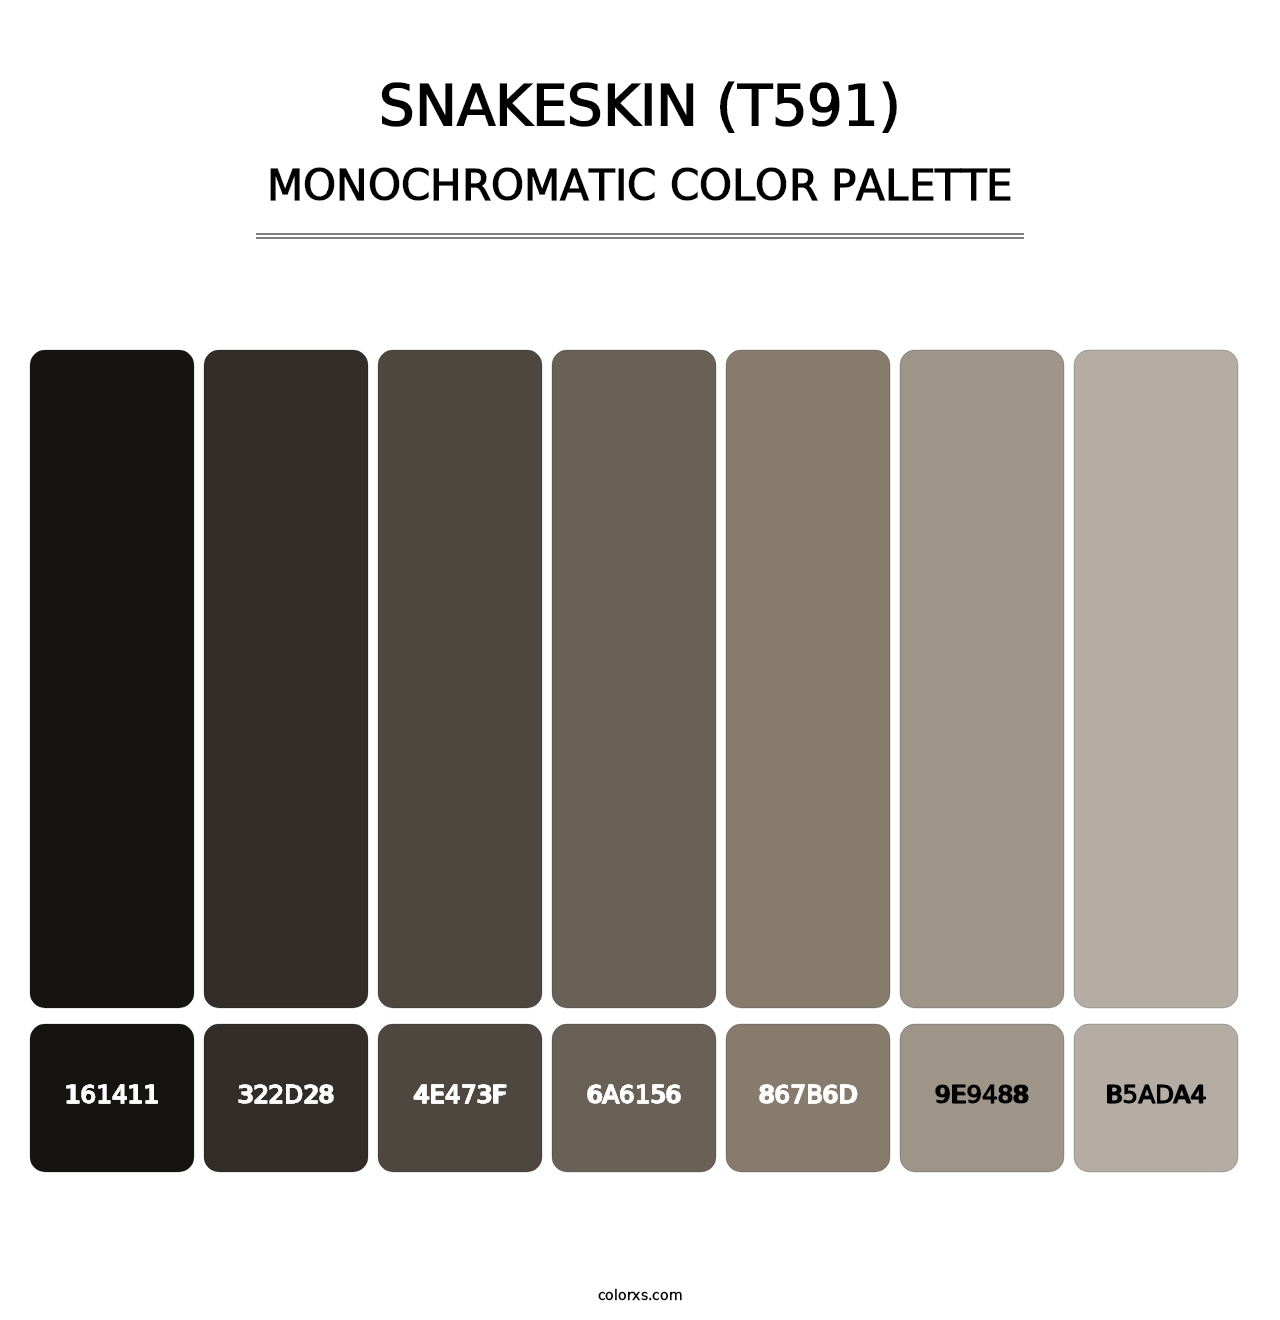 Snakeskin (T591) - Monochromatic Color Palette